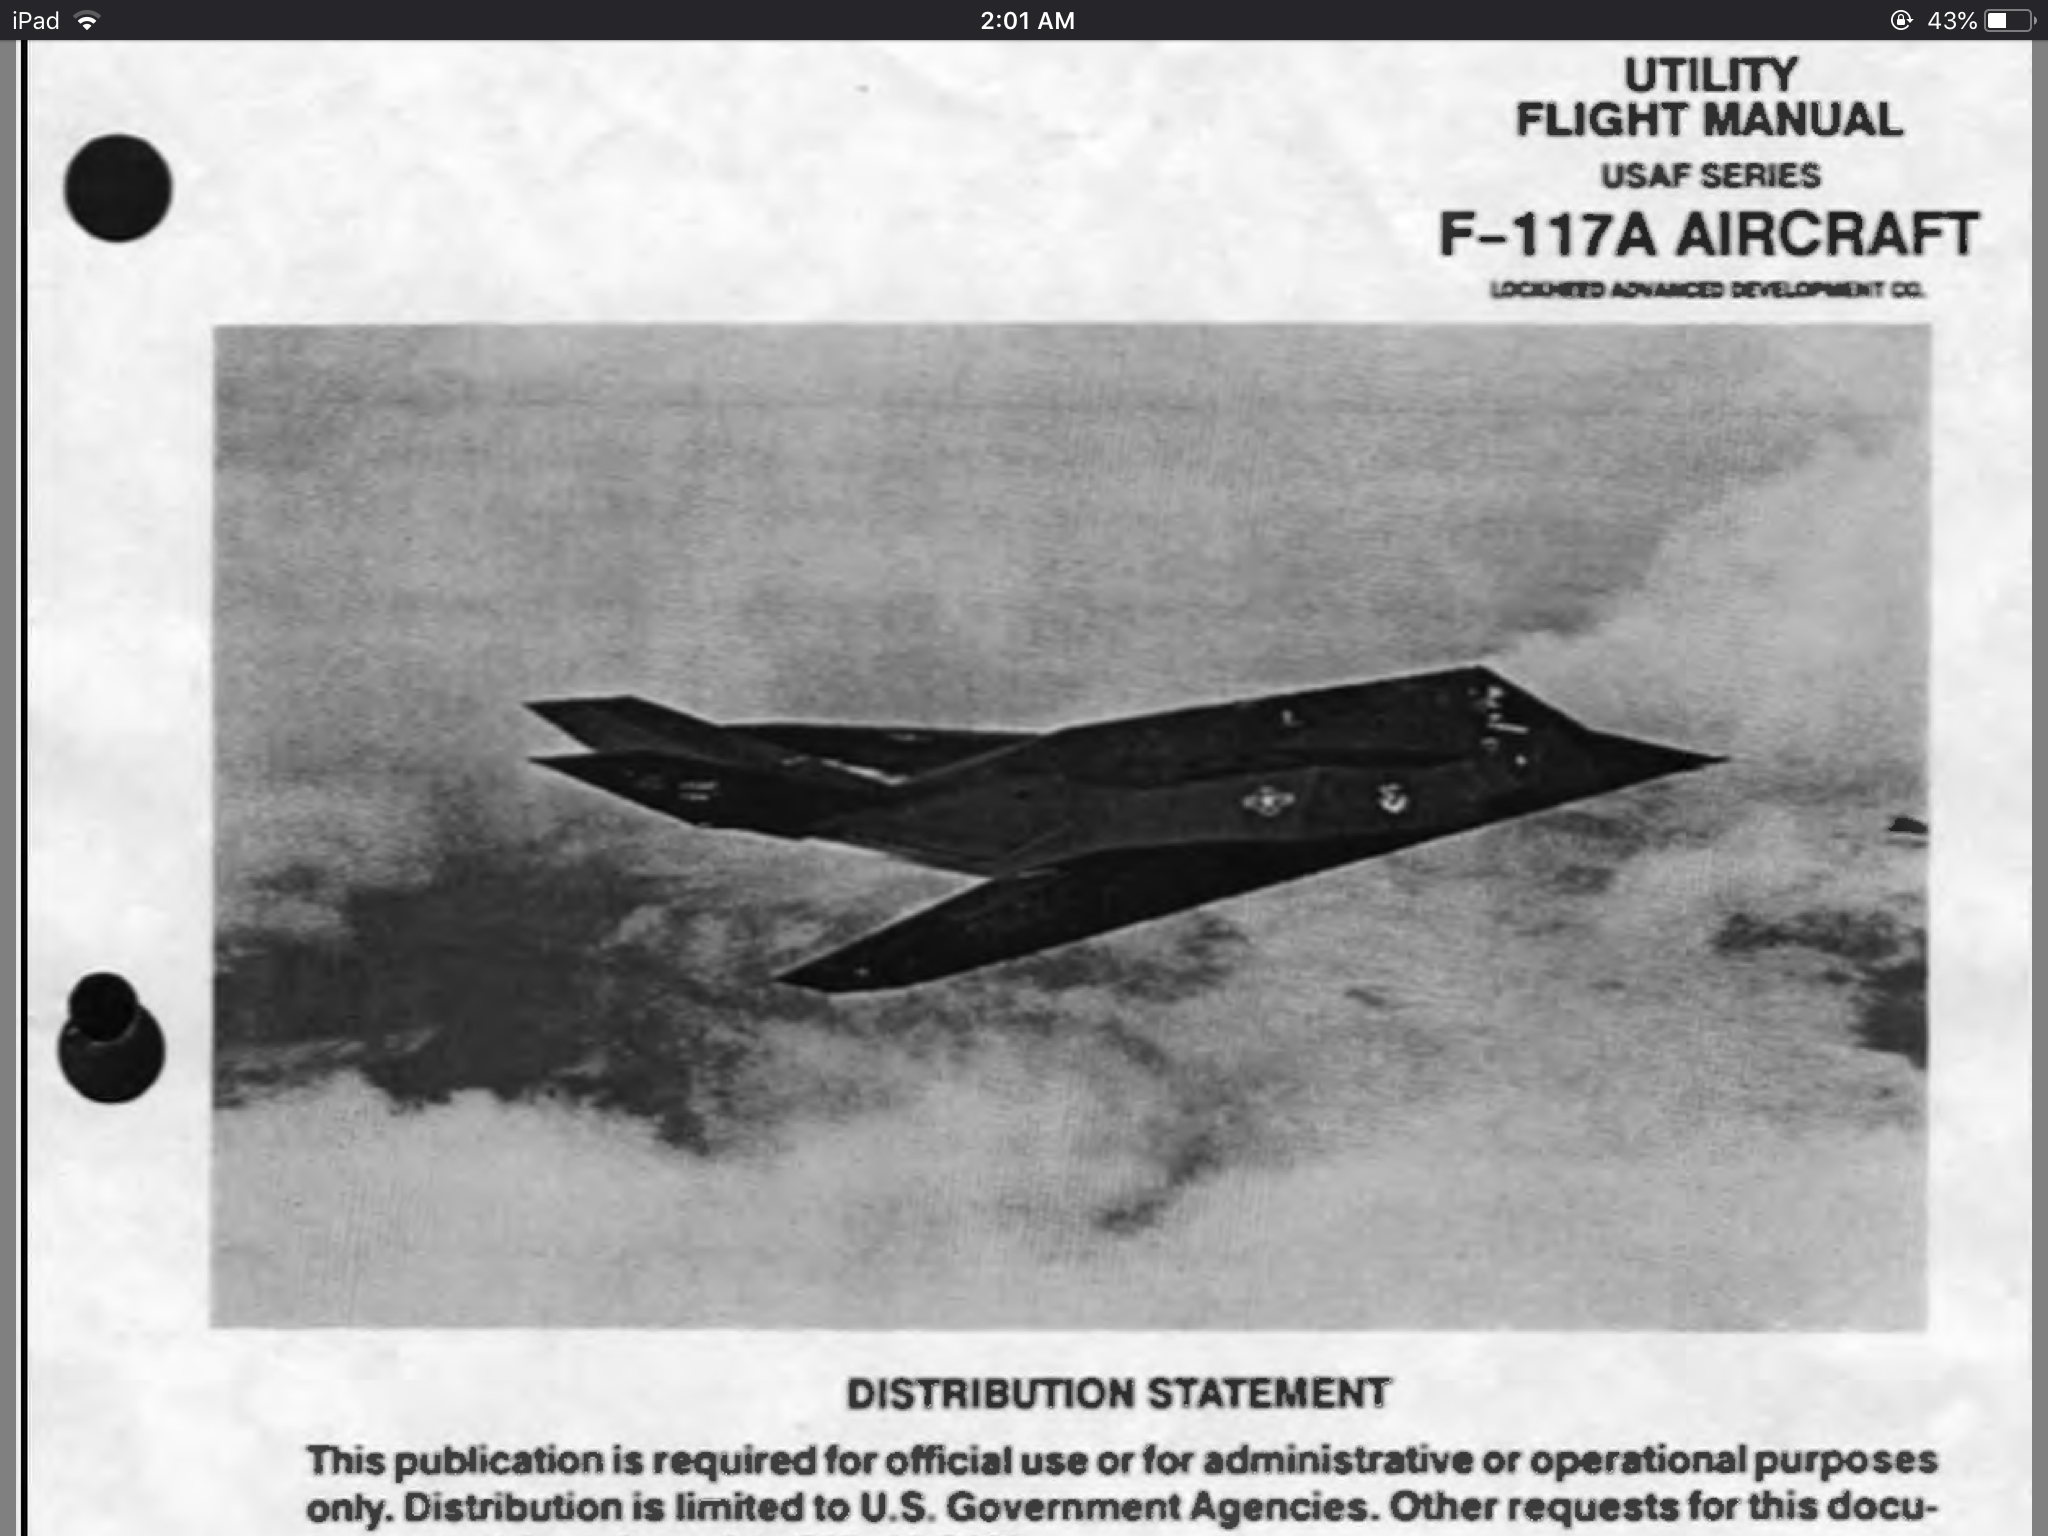 F-117a utility flight manual online